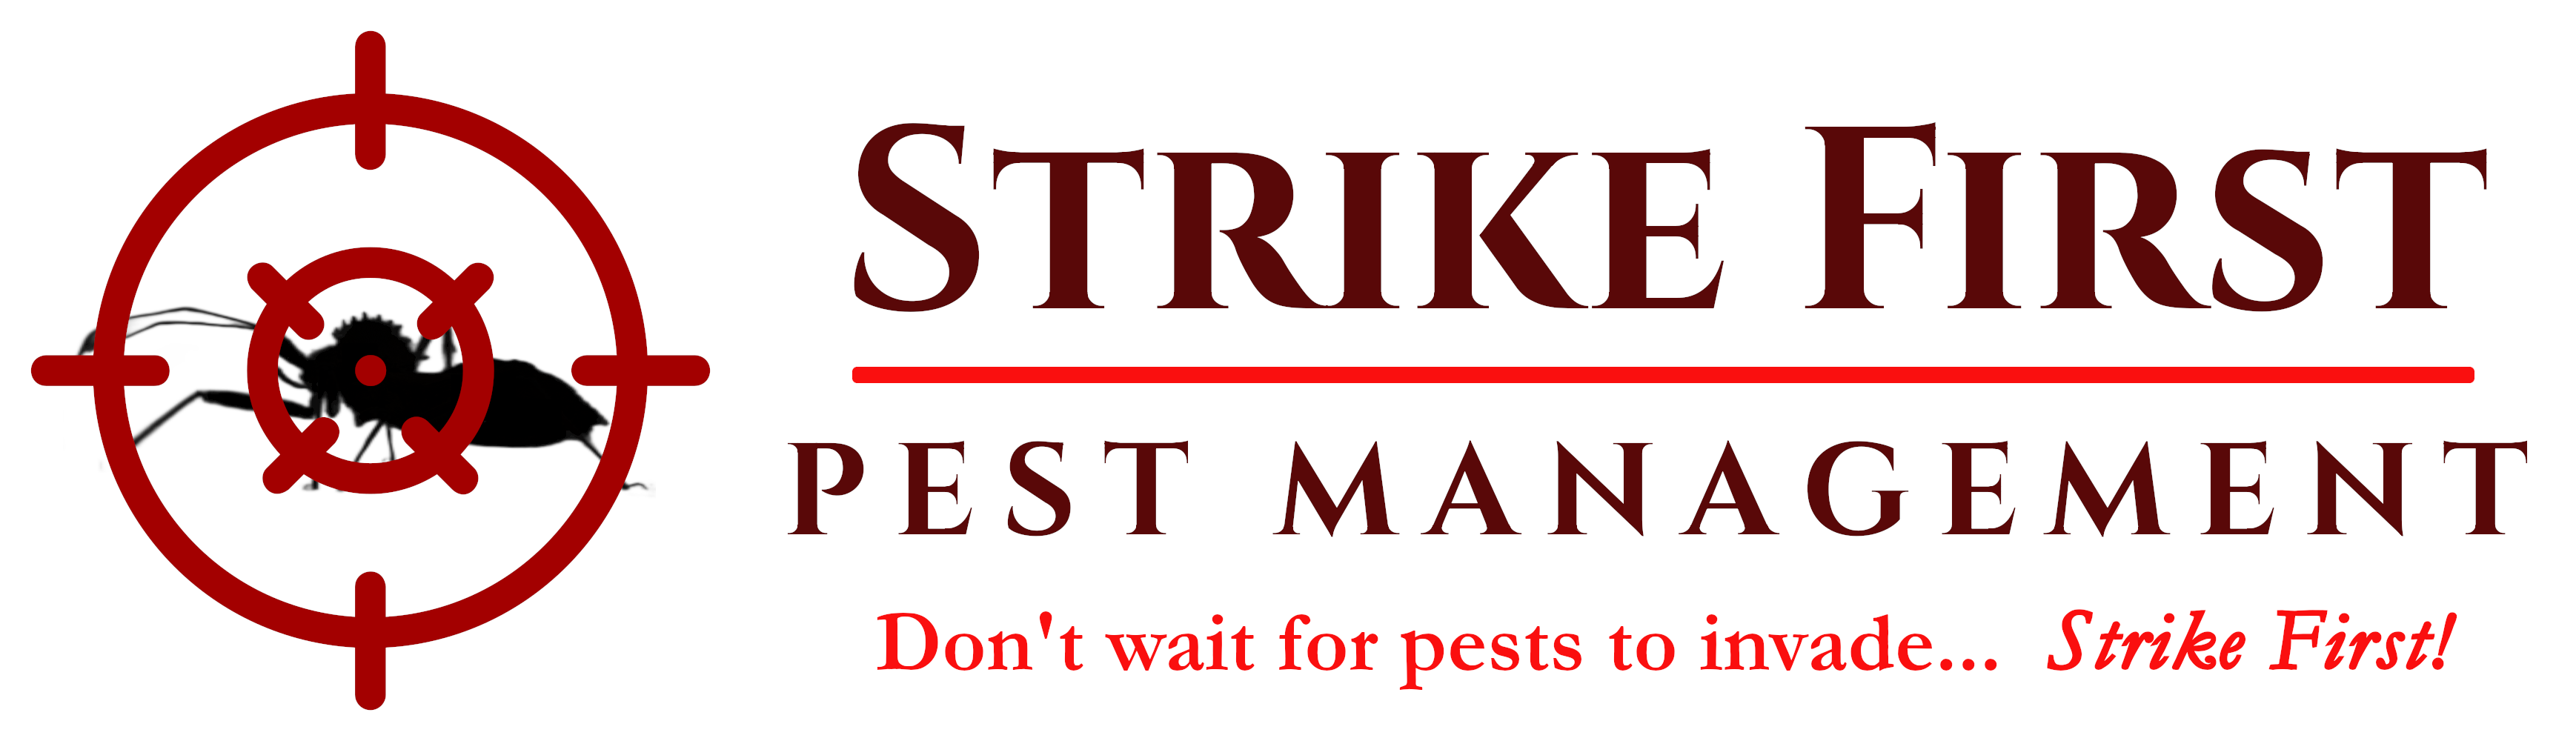 Pest Control Service Wichita, ks